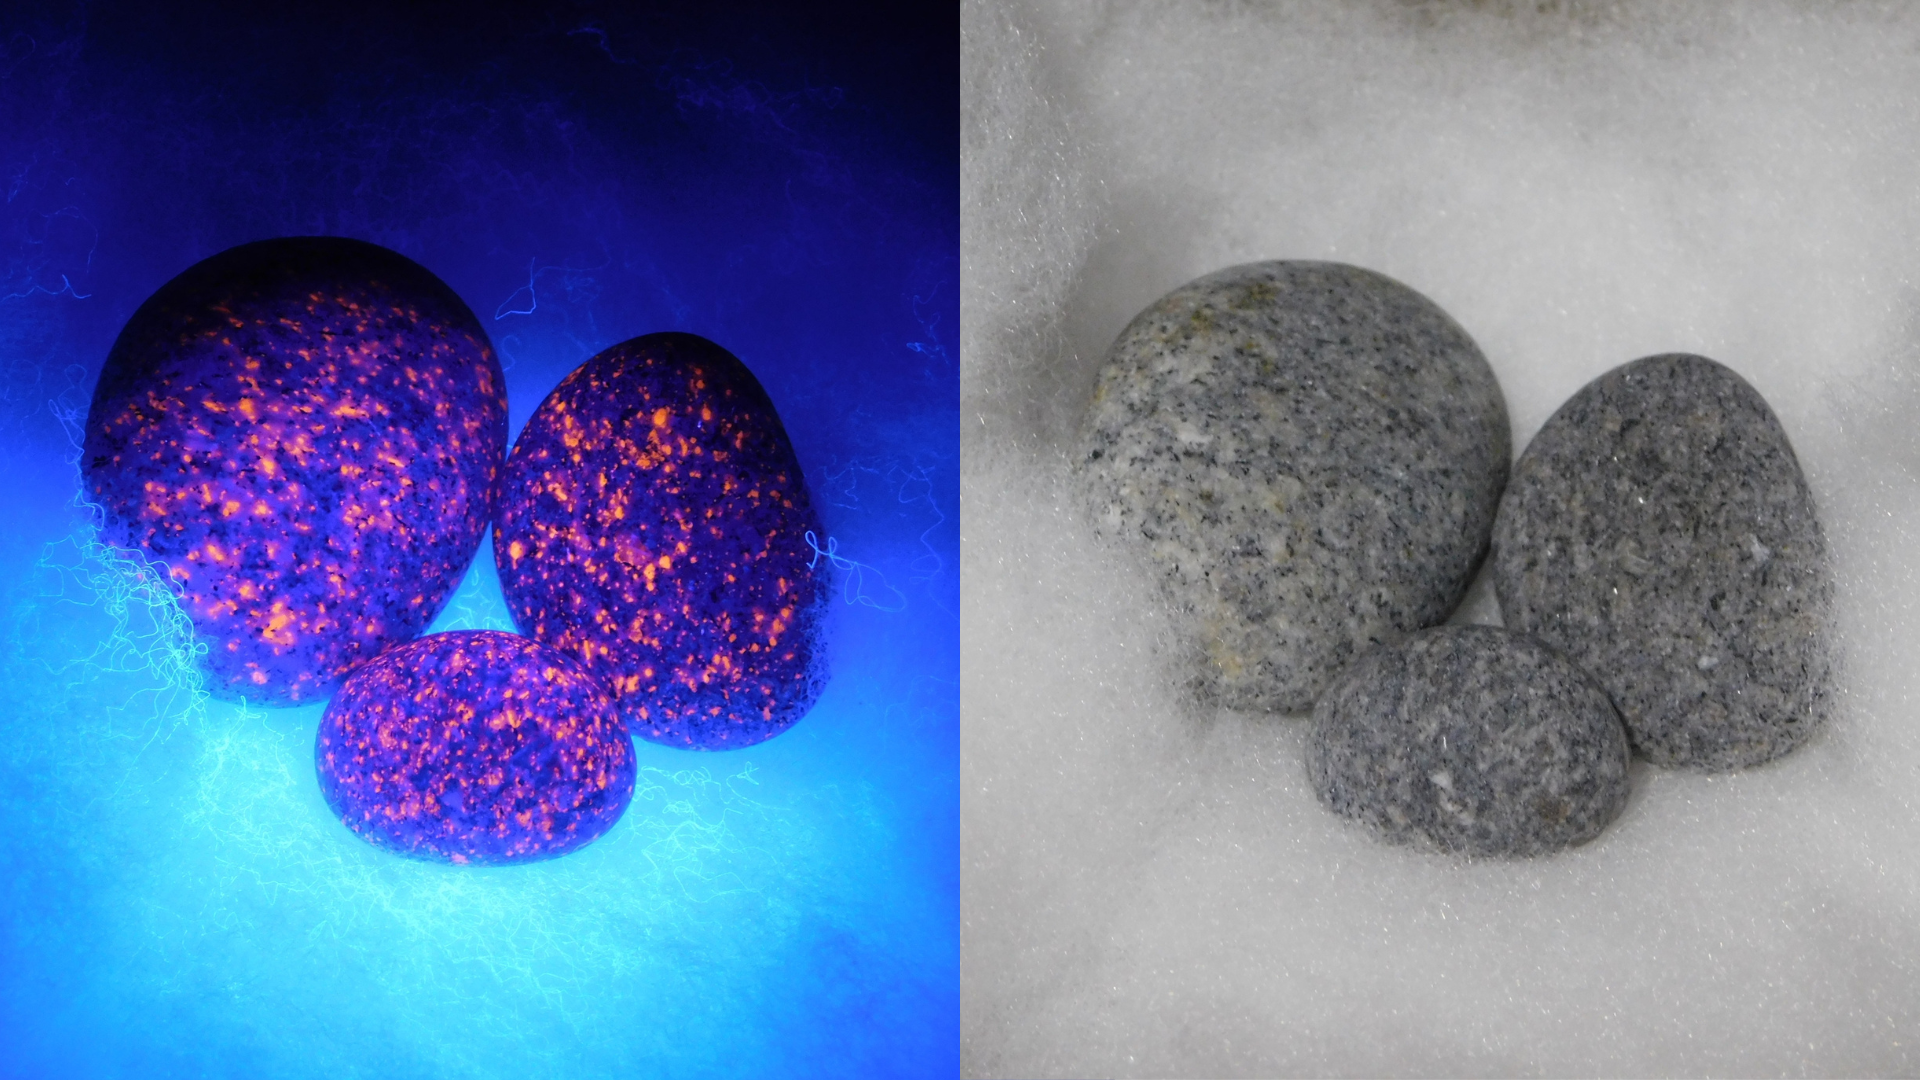 Yooperlite rocks under blacklight vs. natural light